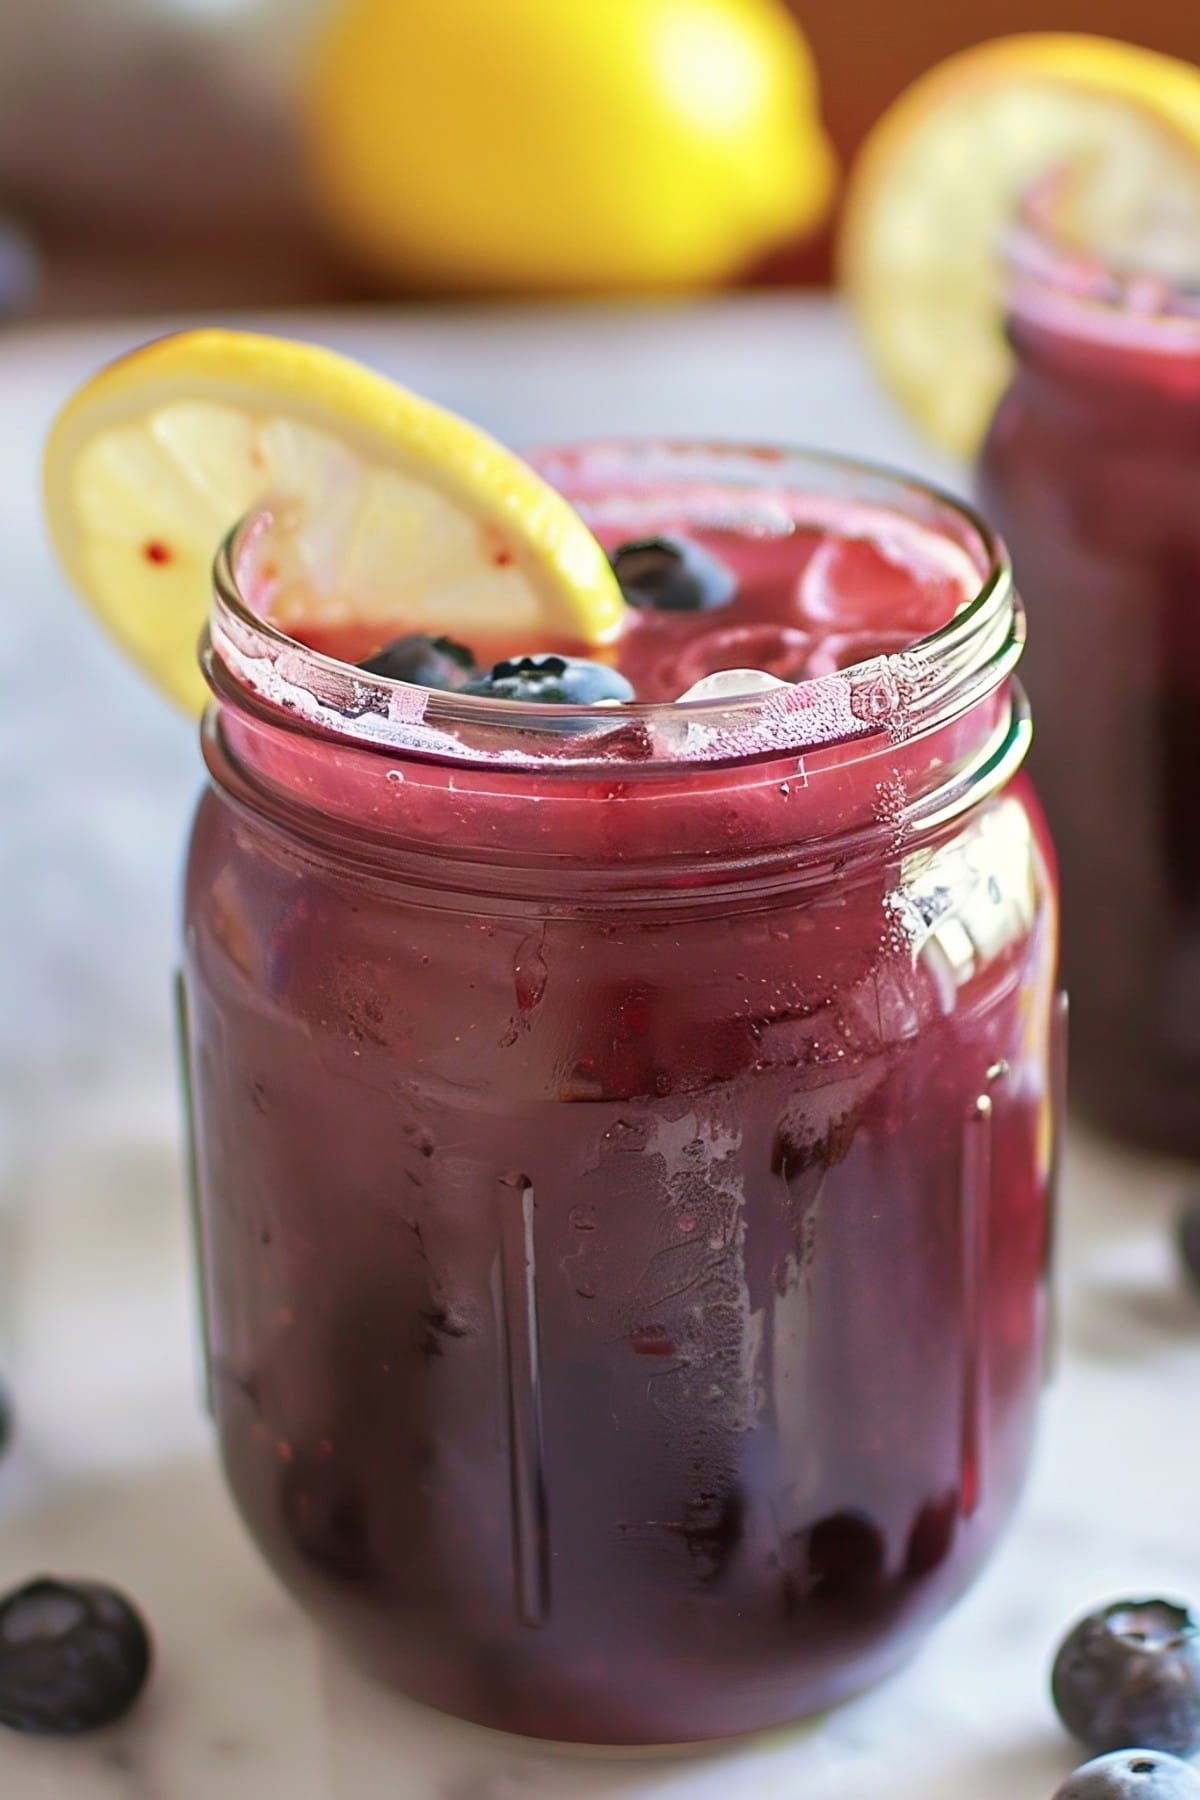 Cold and refreshing homemade blueberry lemonade in mason jars, garnished with lemon